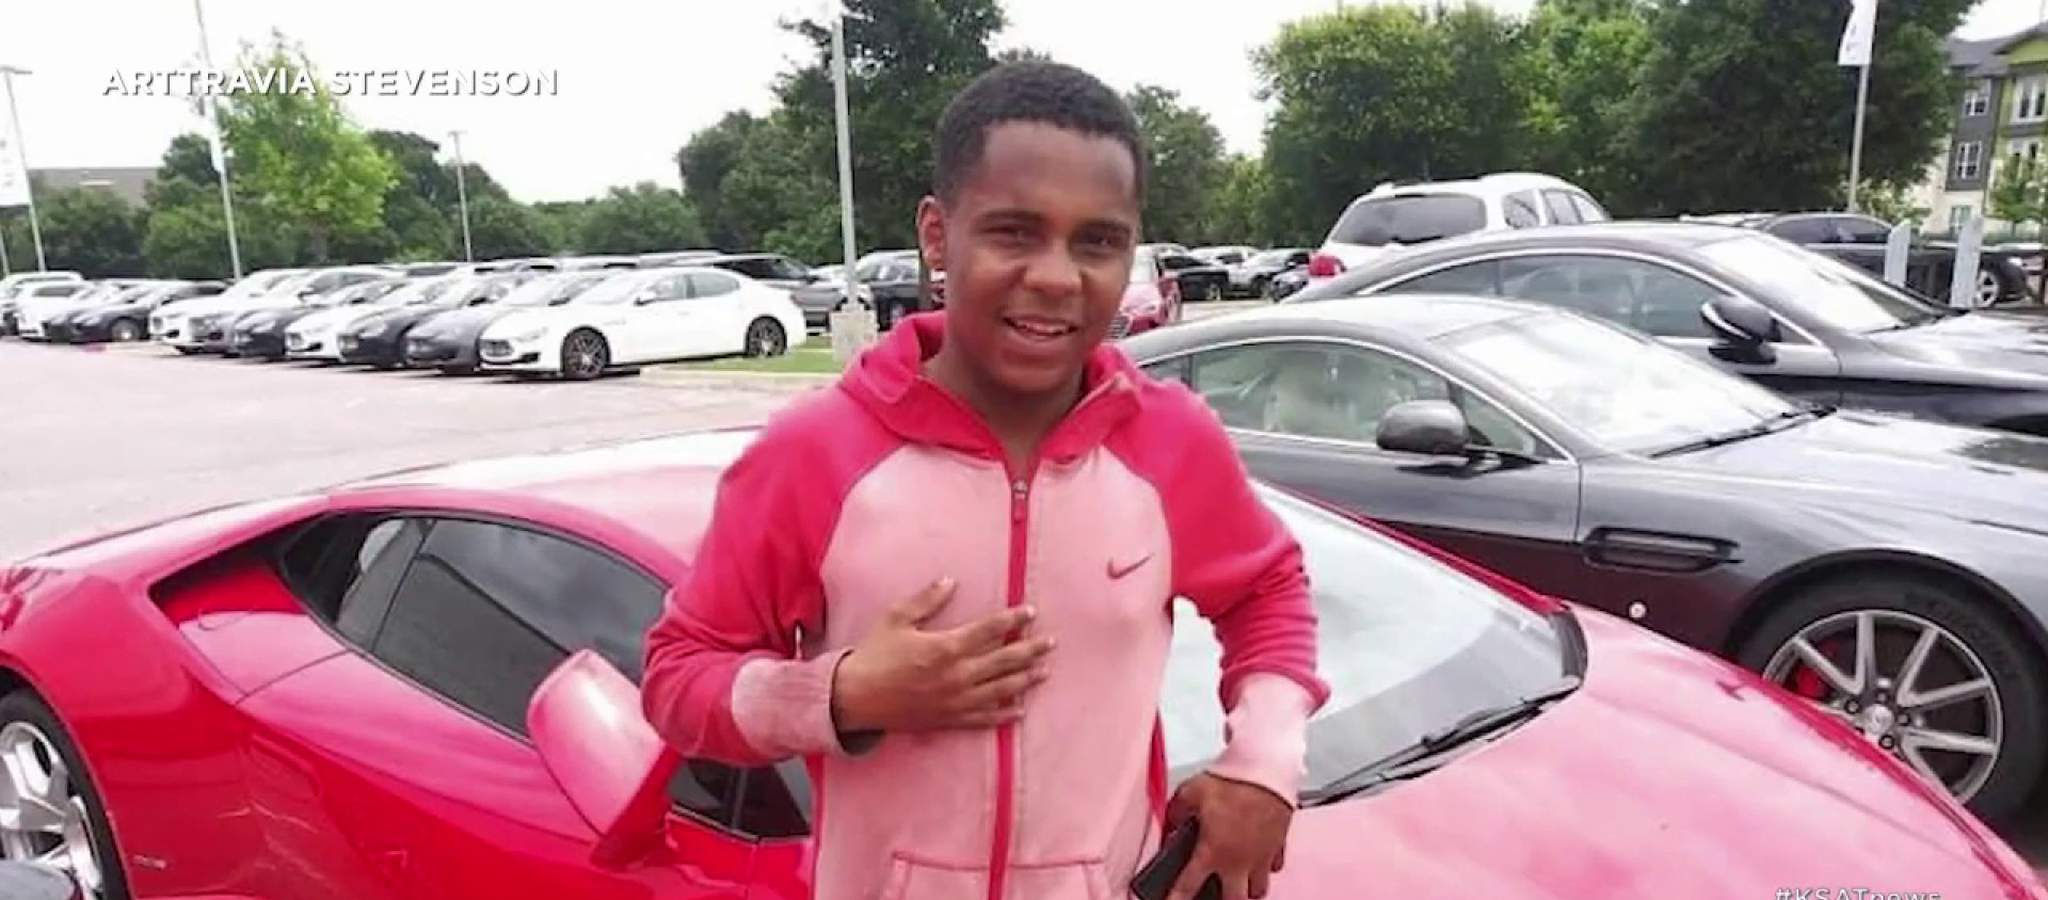 Heartbroken mother desperate for closure after teen son shot, killed